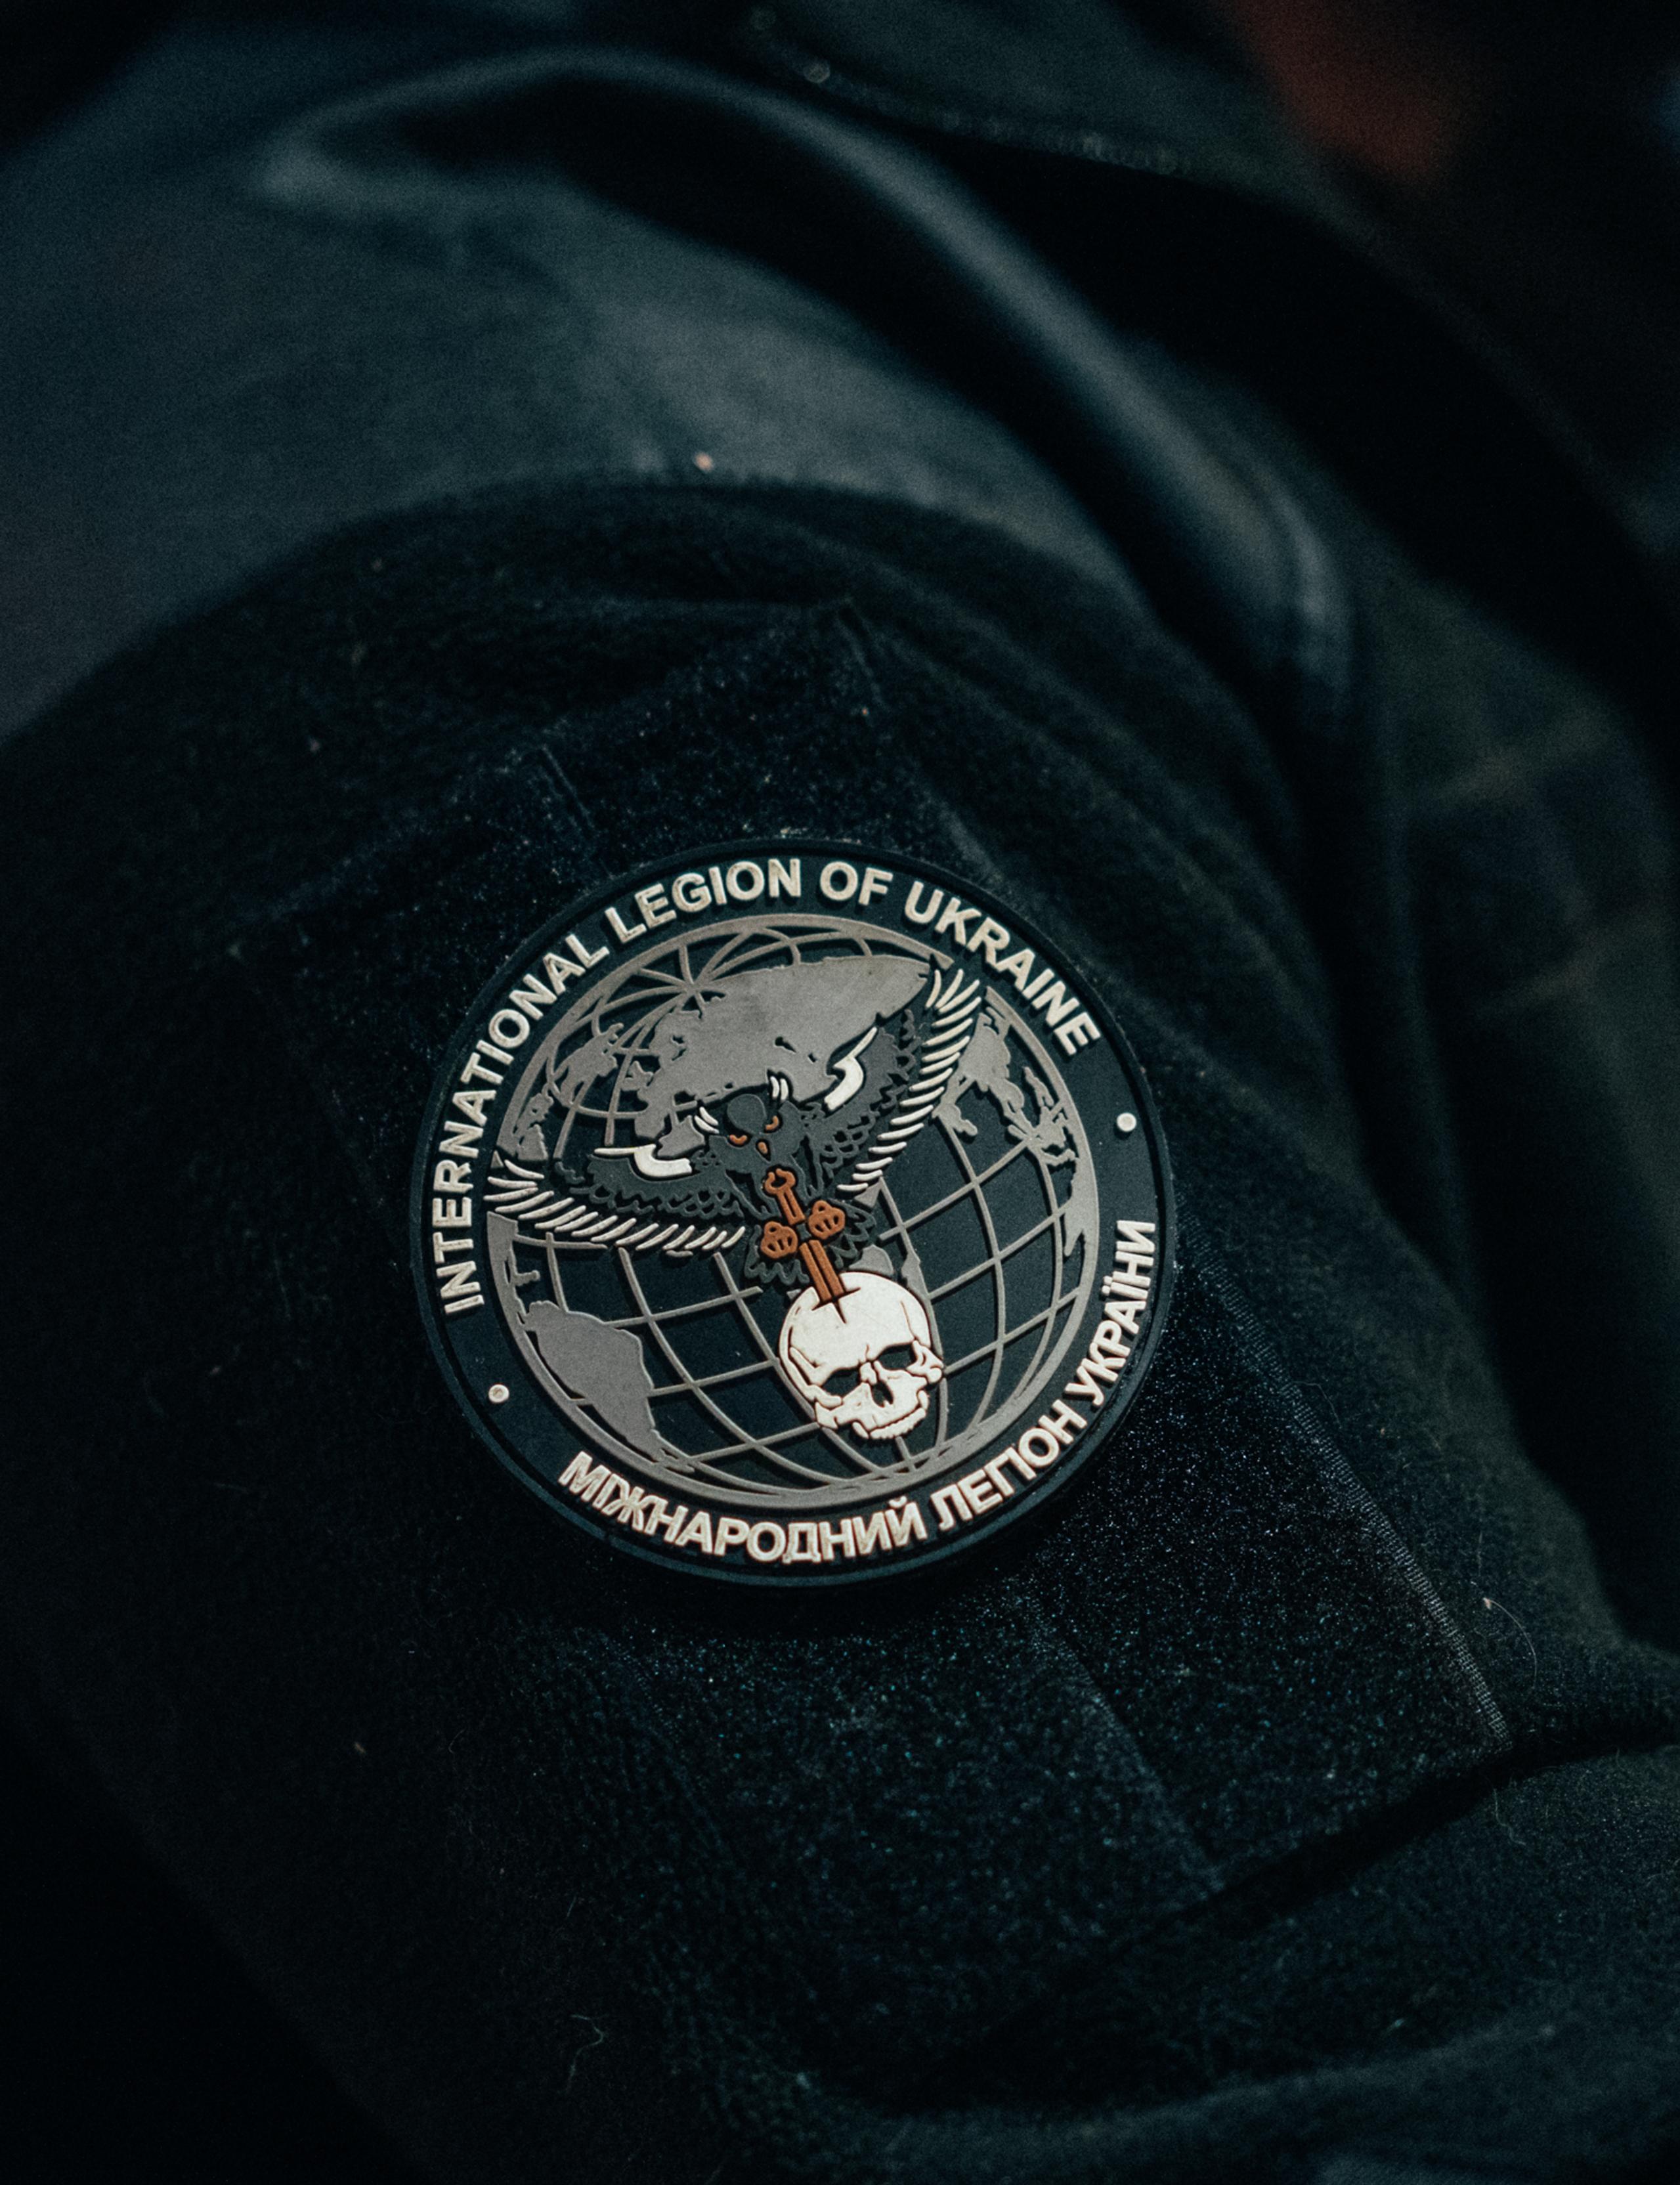 Closeup of Internation Legion of Ukraine patch with owl and skull illustration